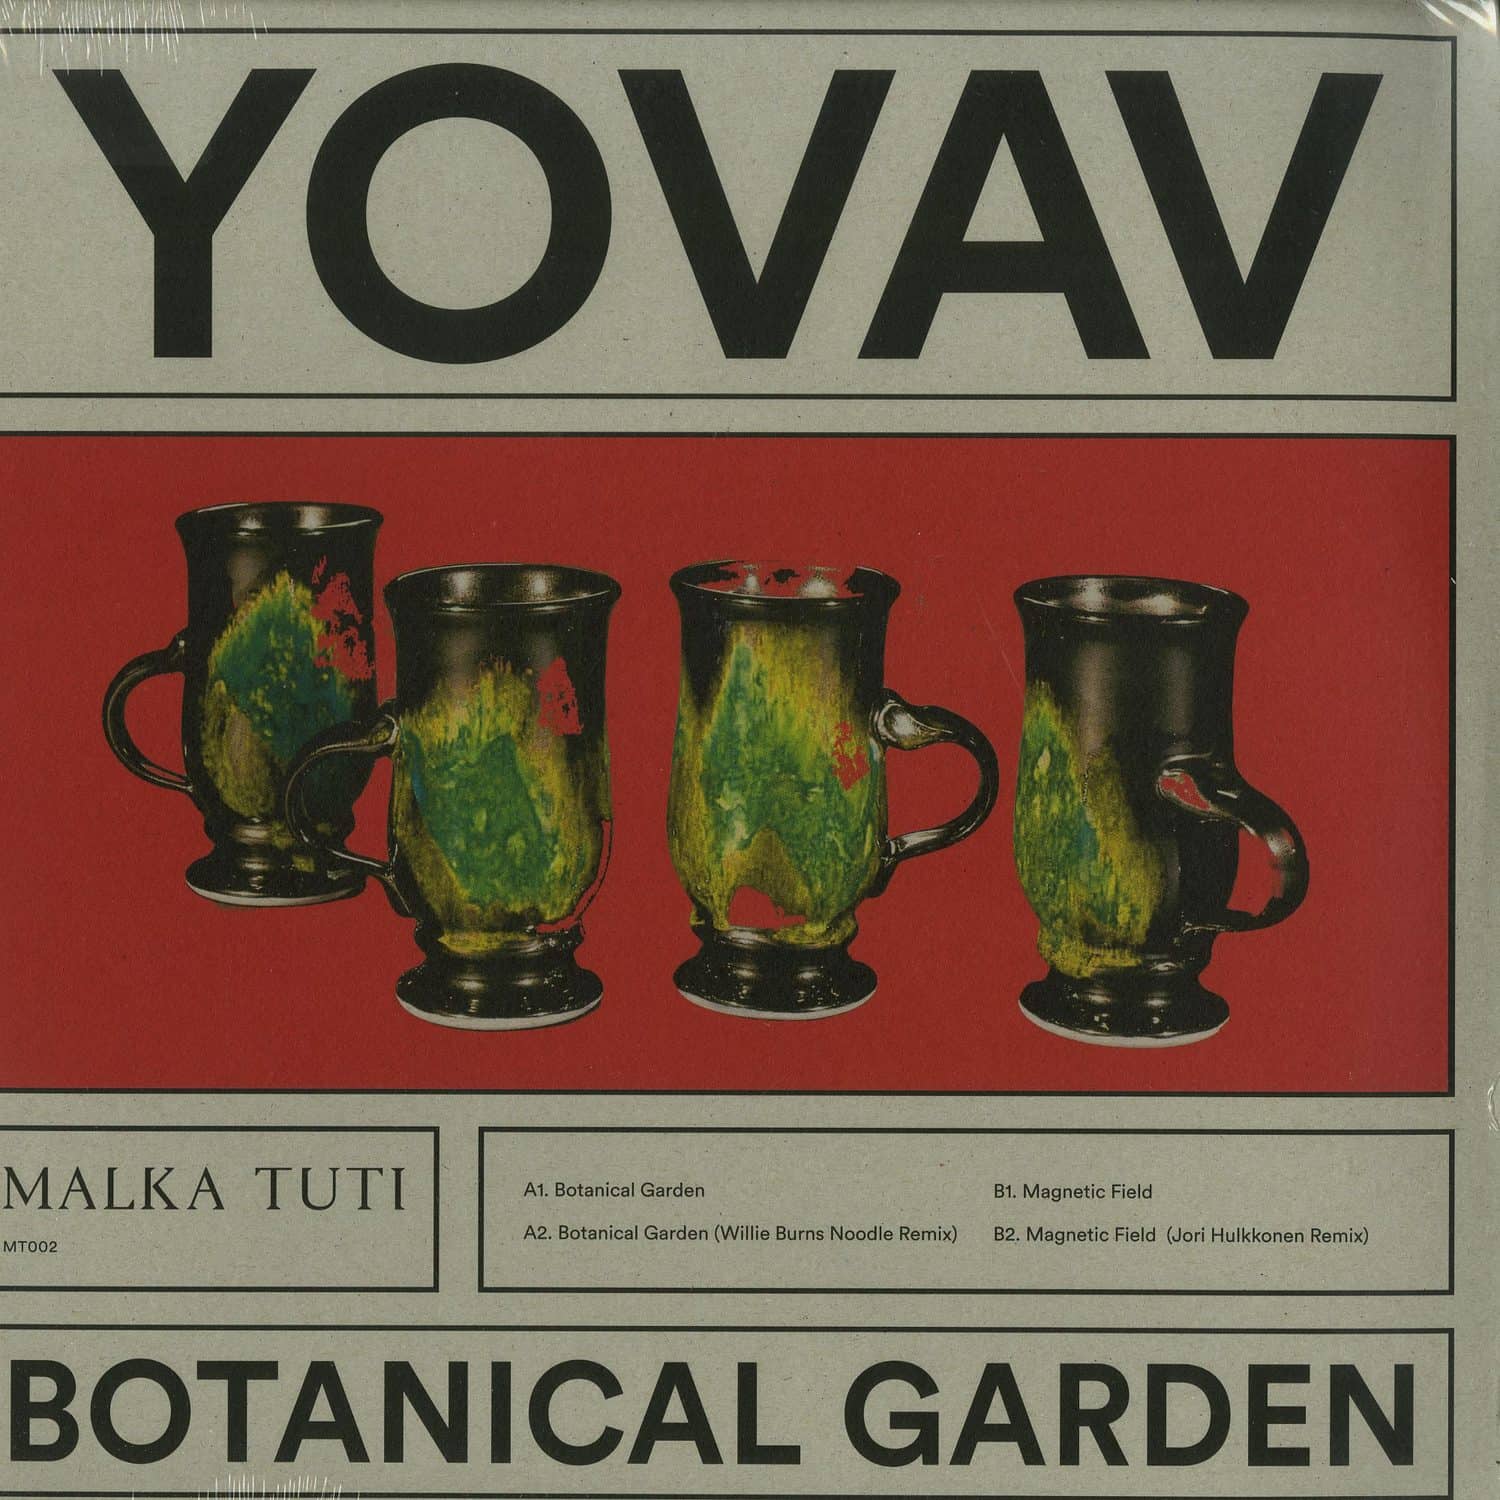 Yovav - BOTANICAL GARDEN